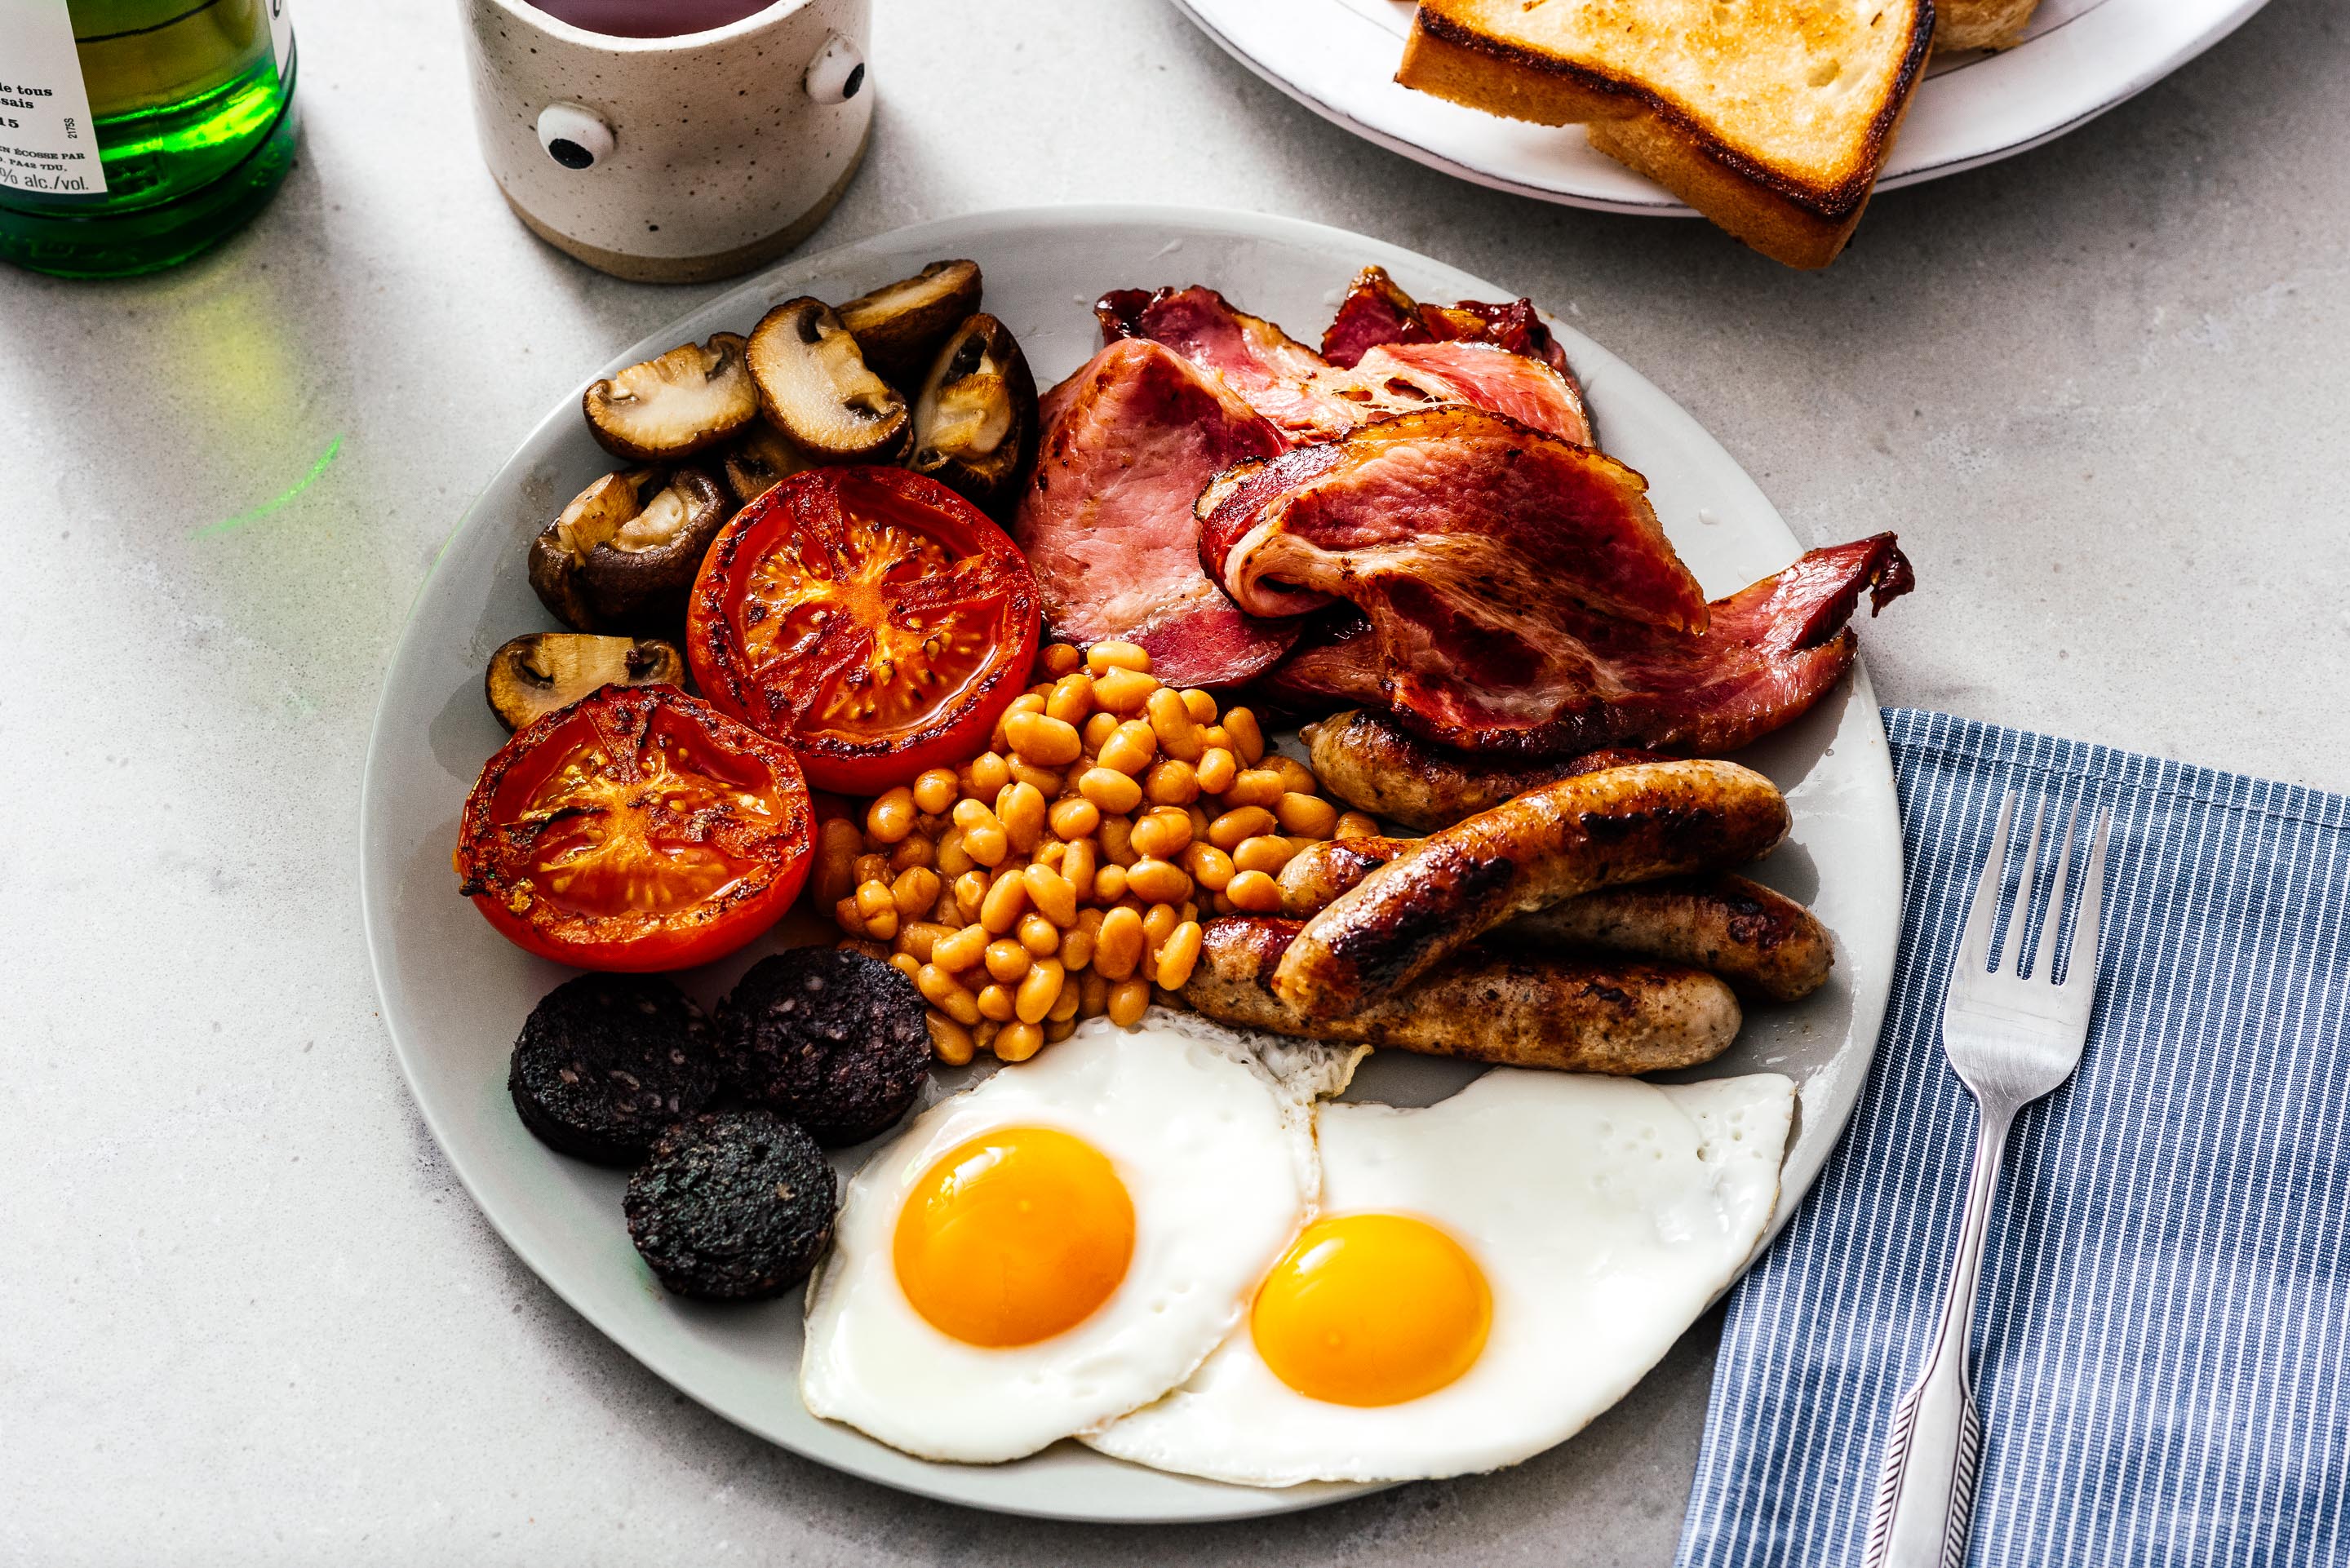 Инглиш брекфаст. Бритиш Брекфаст. Английский завтрак Британия. Full English Breakfast знаменитый английский завтрак. Традиционный завтрак в Англии.